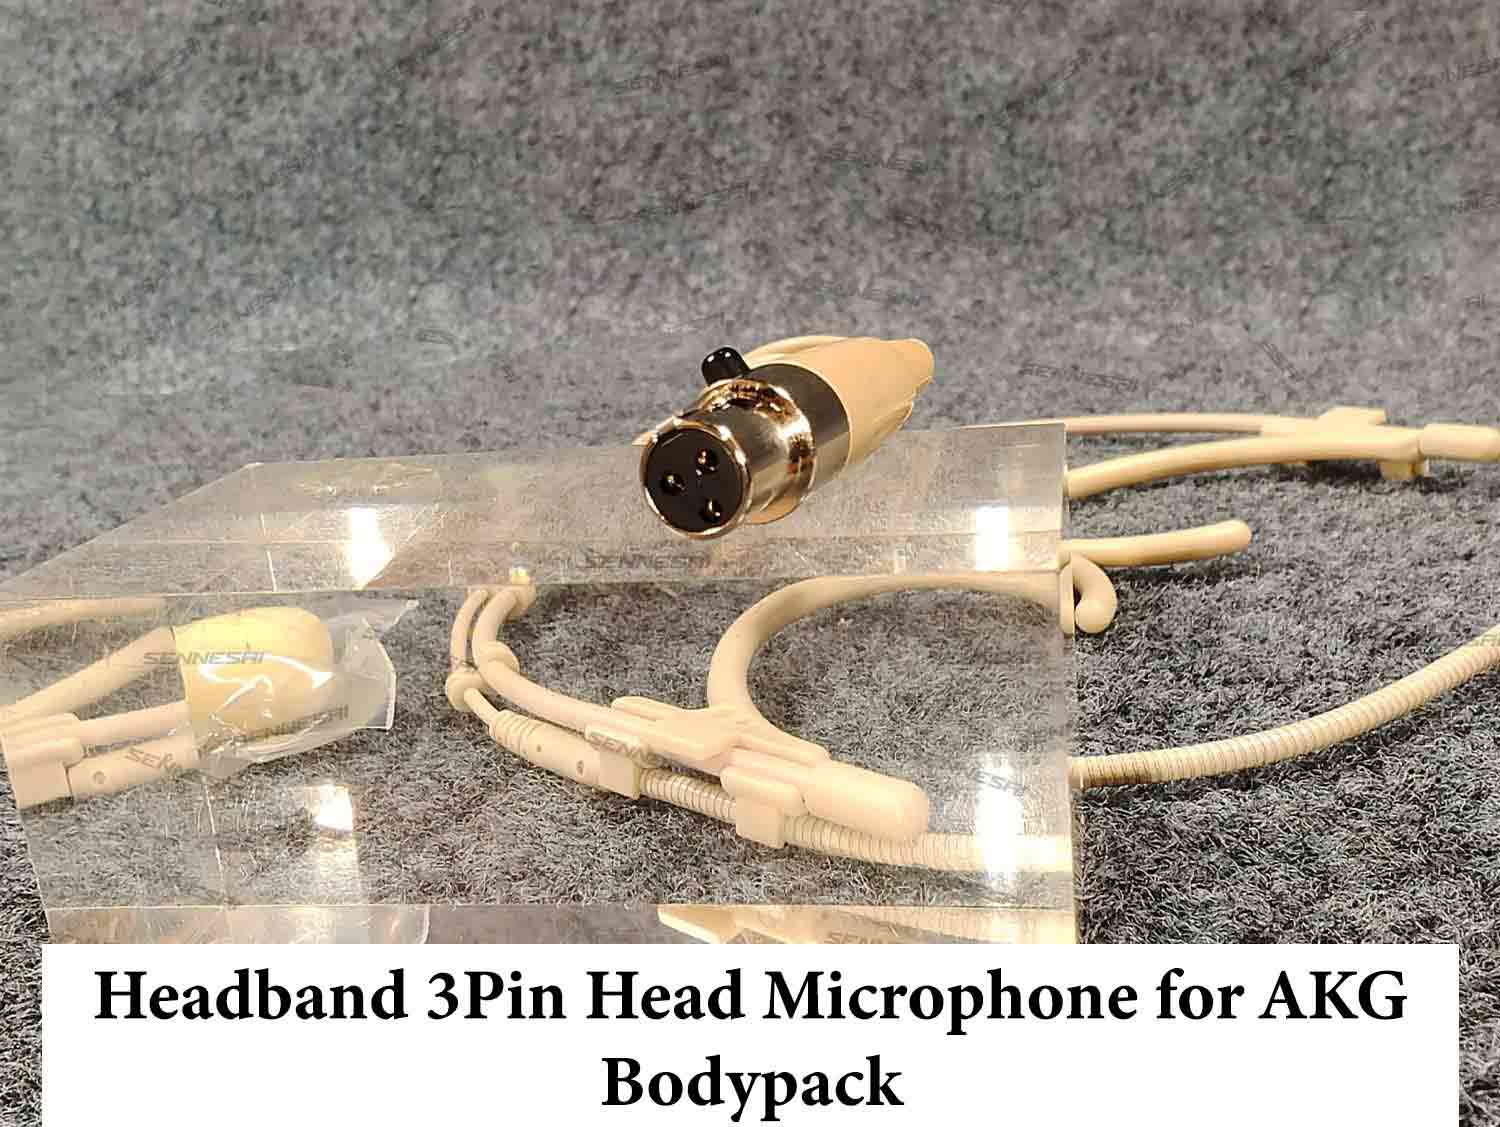 3Pin Headband Microphone for AKG Bodypack